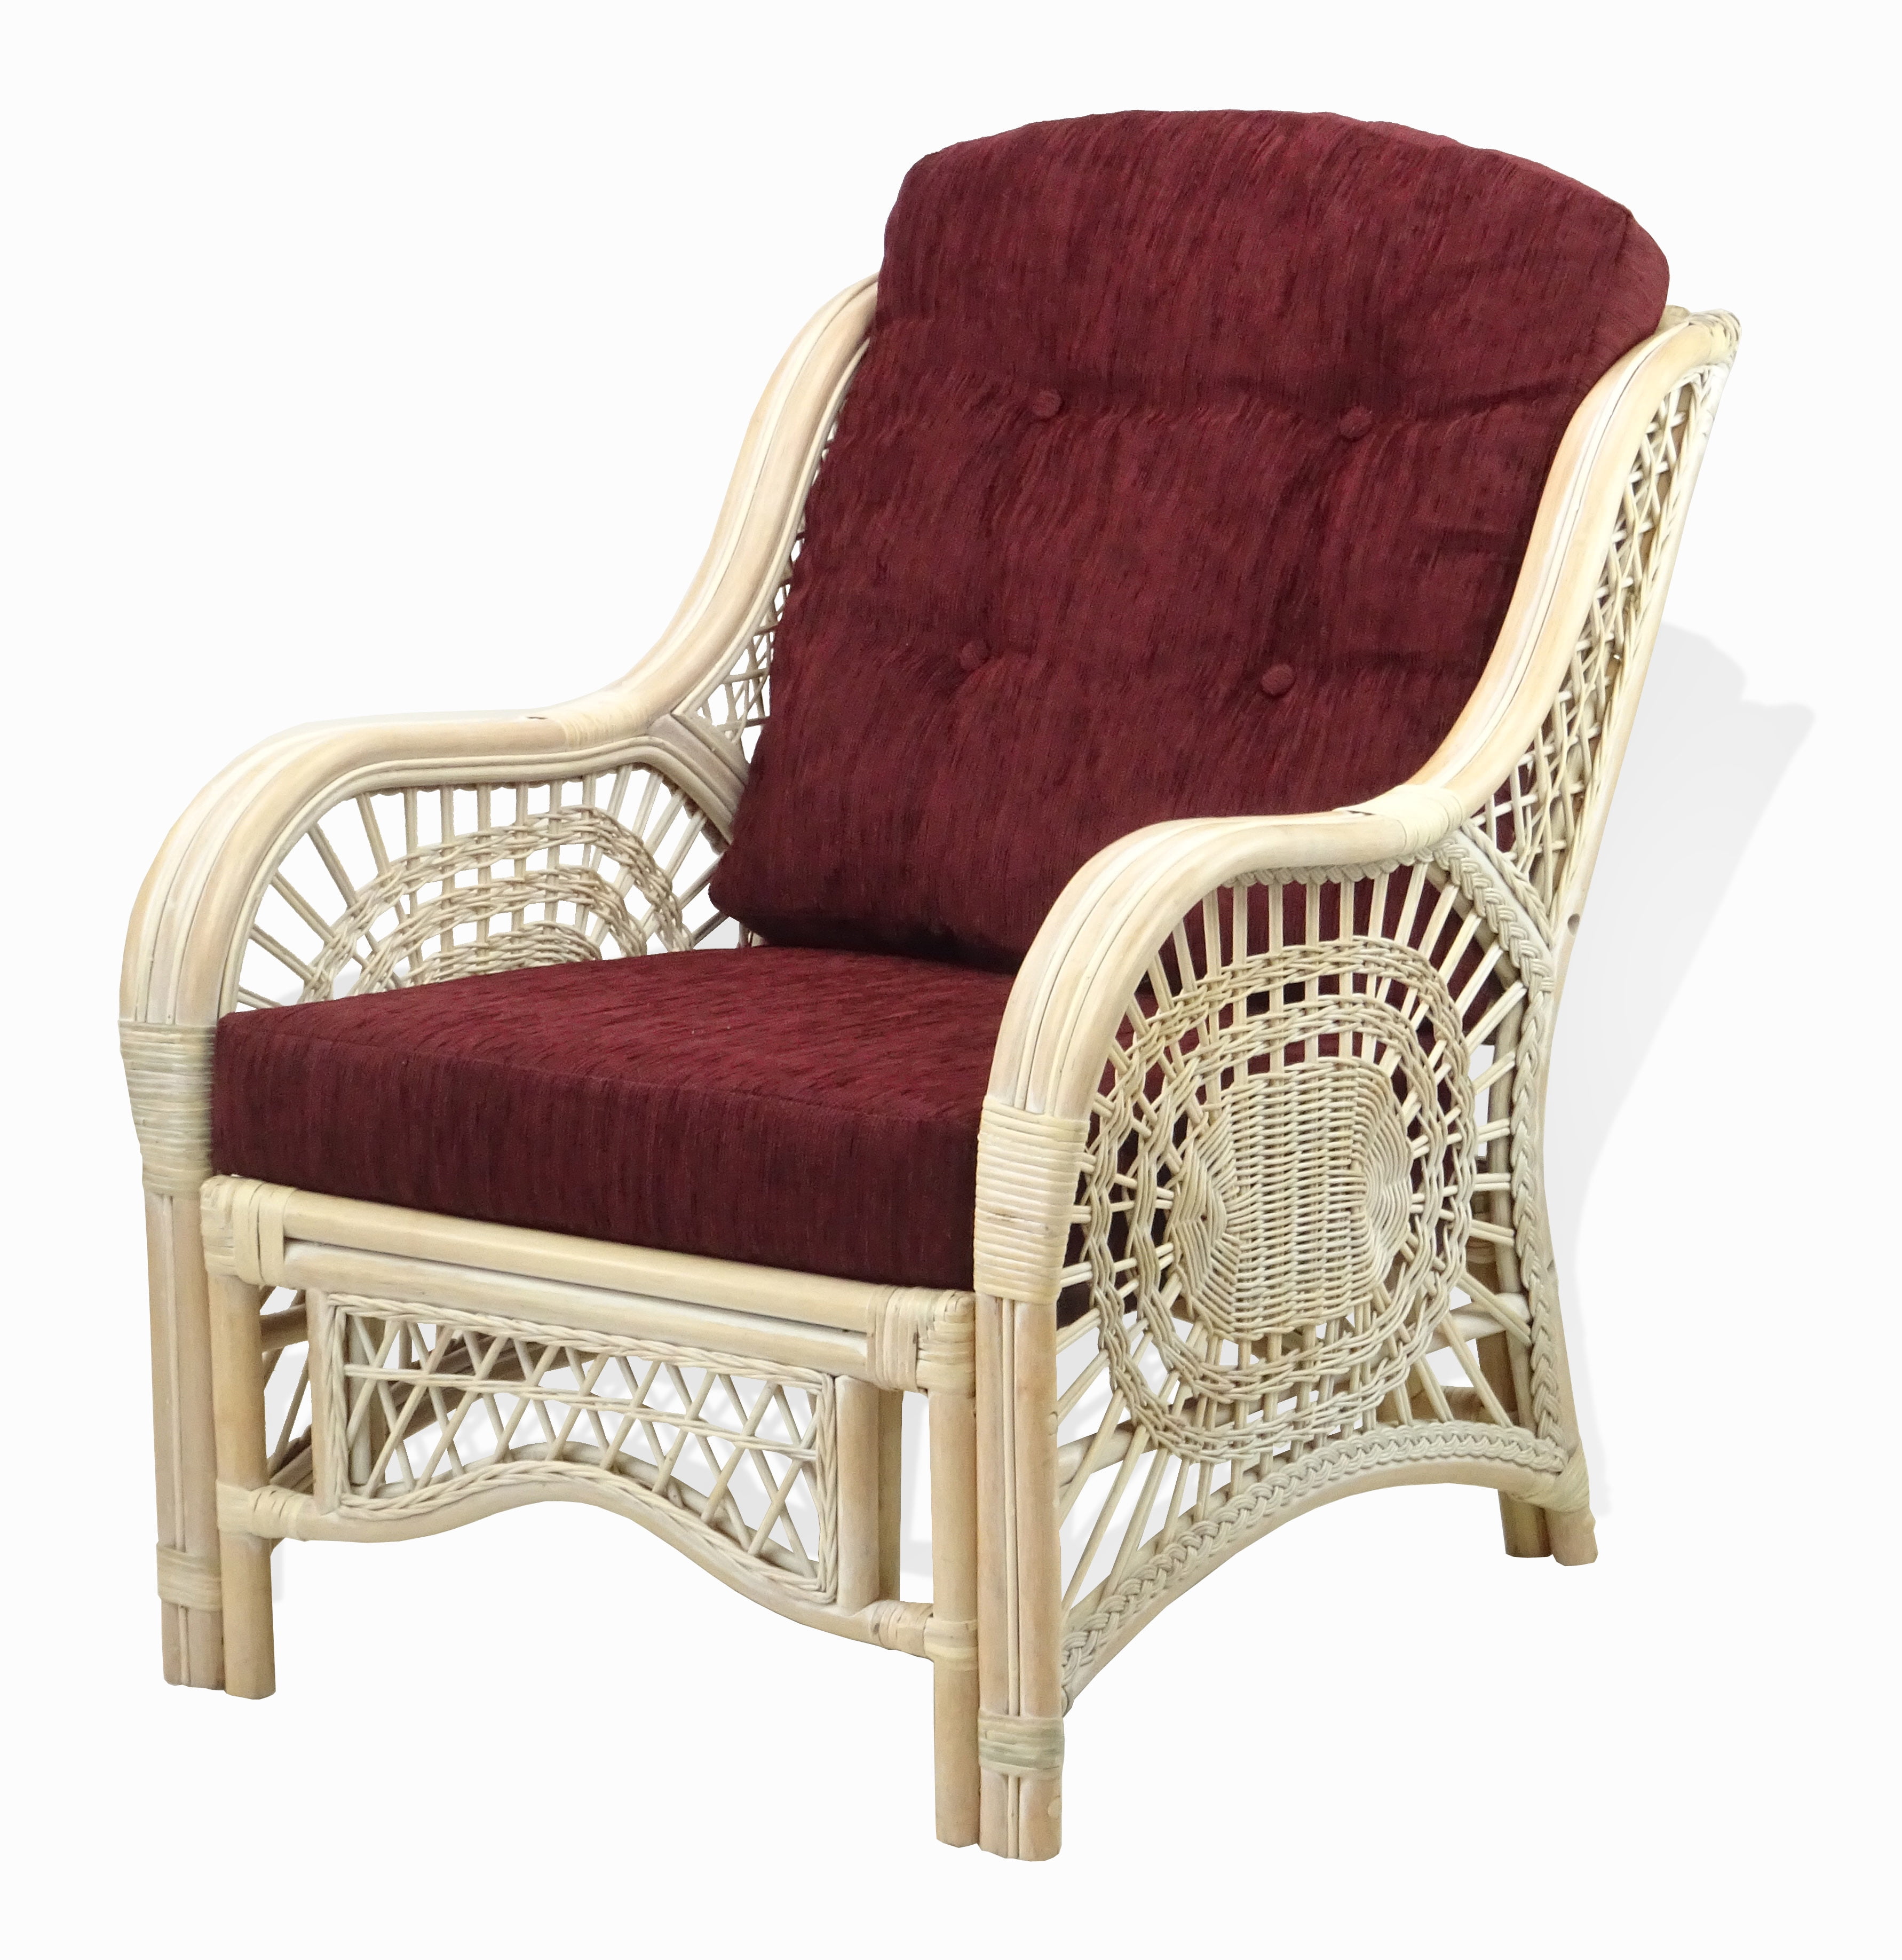 SunBear Furniture Lounge Jam Arm Chair ECO Natural Handmade Rattan Wicker with White Cushions Gognac Light Brown